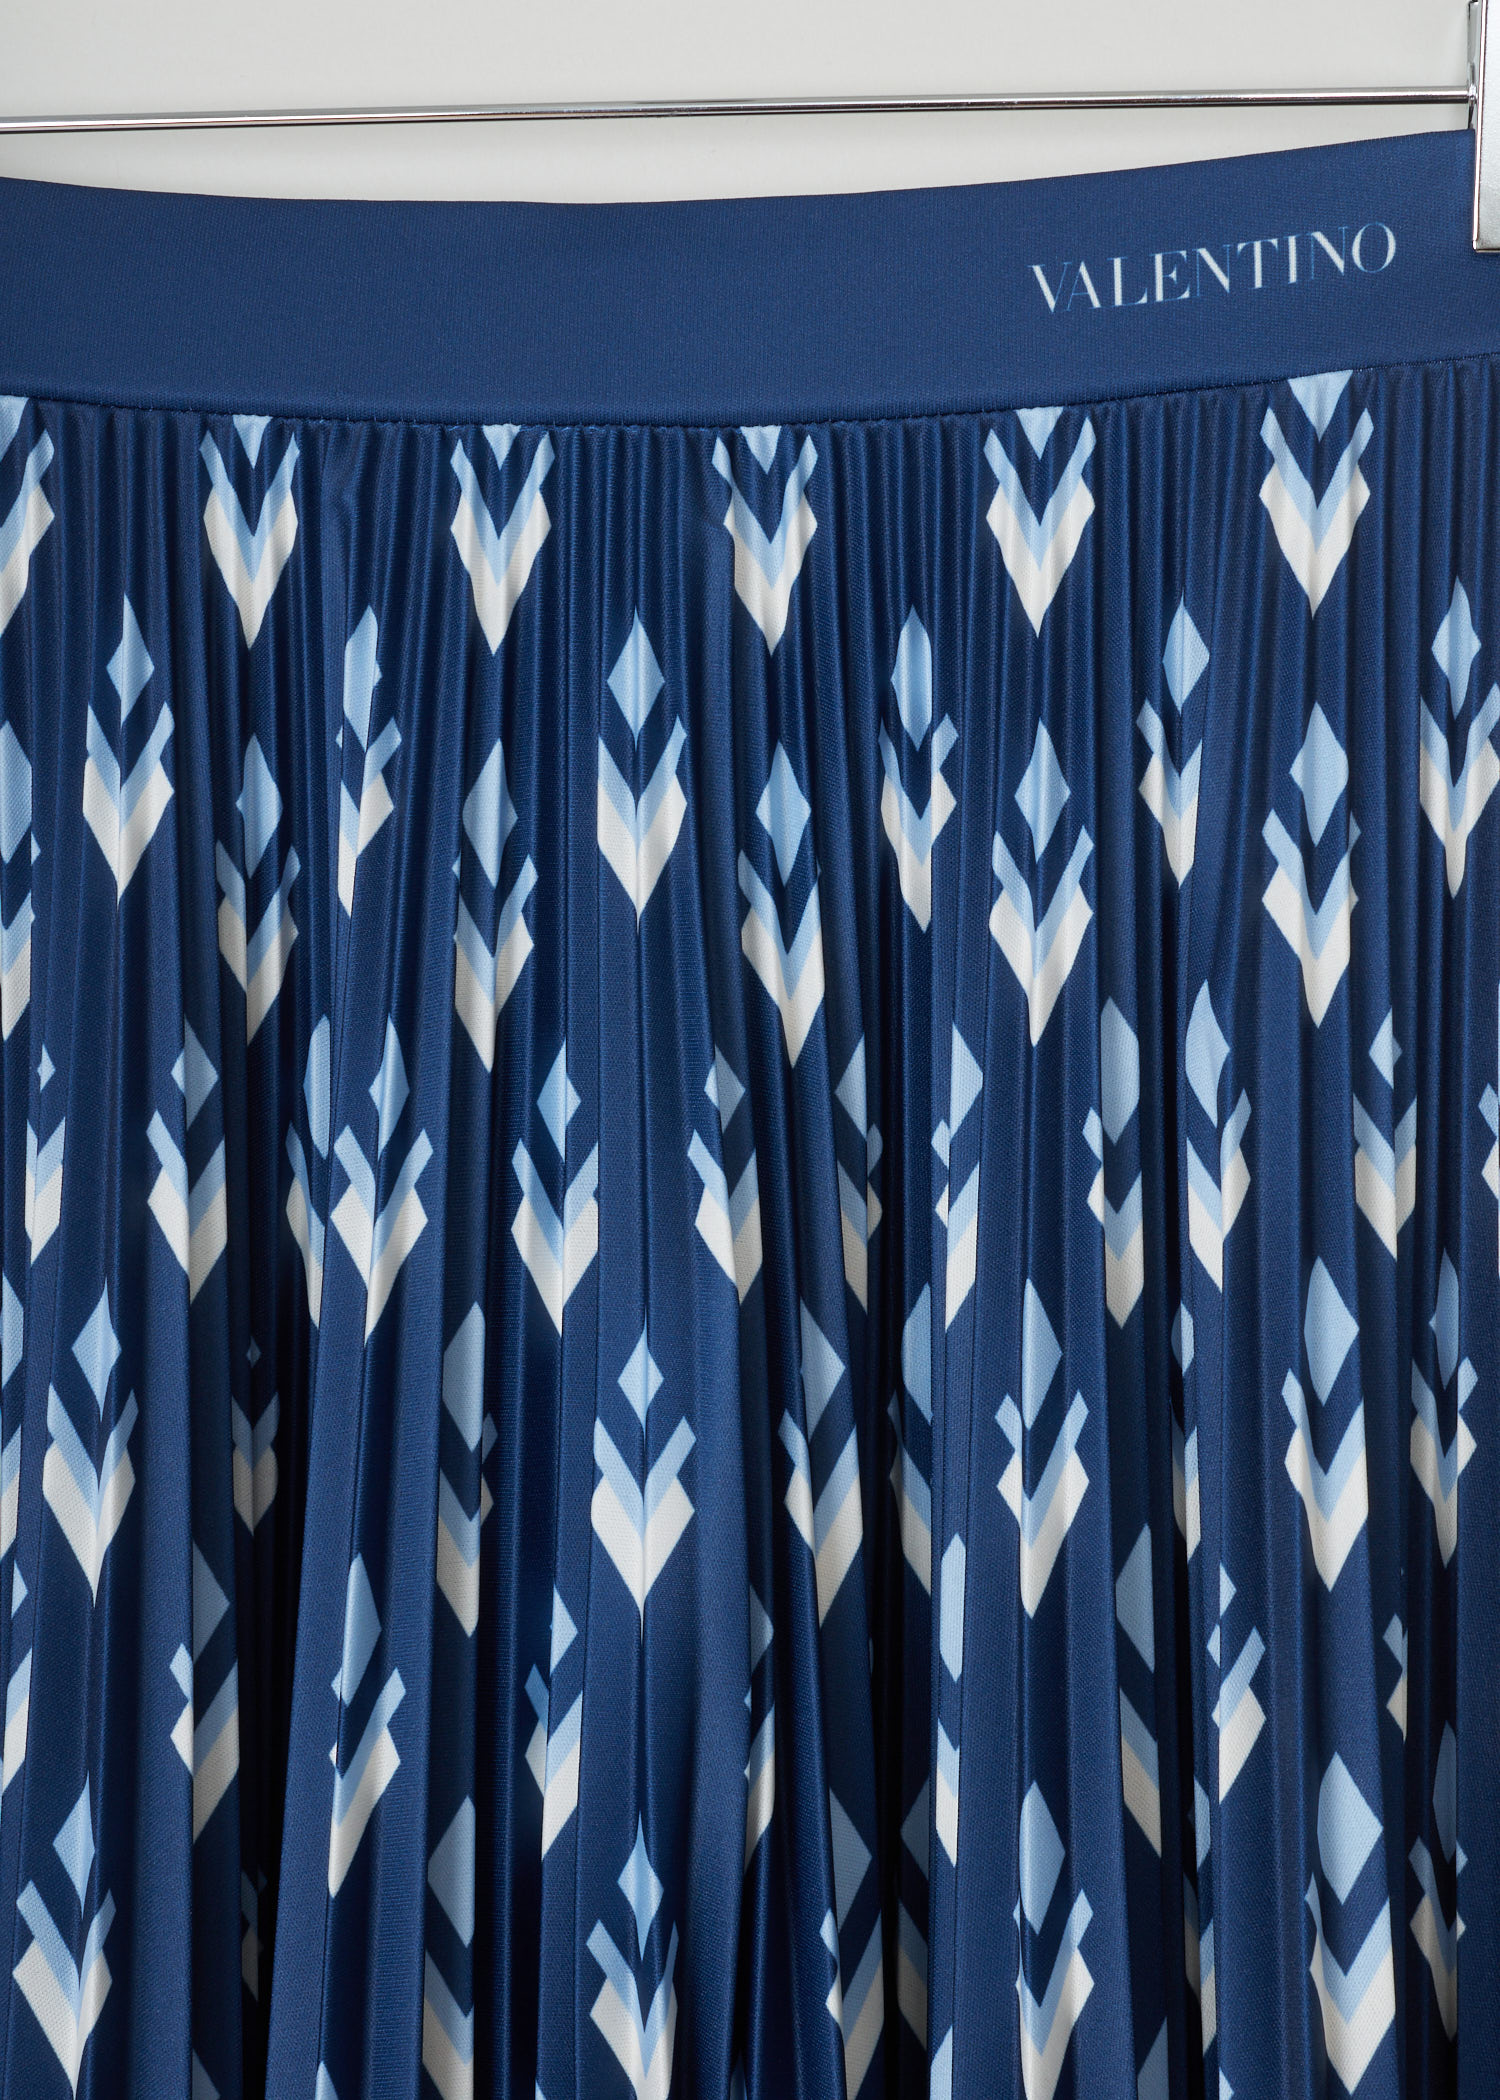 Valentino, Blue pleated diamond print skirt, UB3MD02C5NA_57Q, blue, detail, Blue pleated diamond pattern skirt featuring grosgrain waistband. 